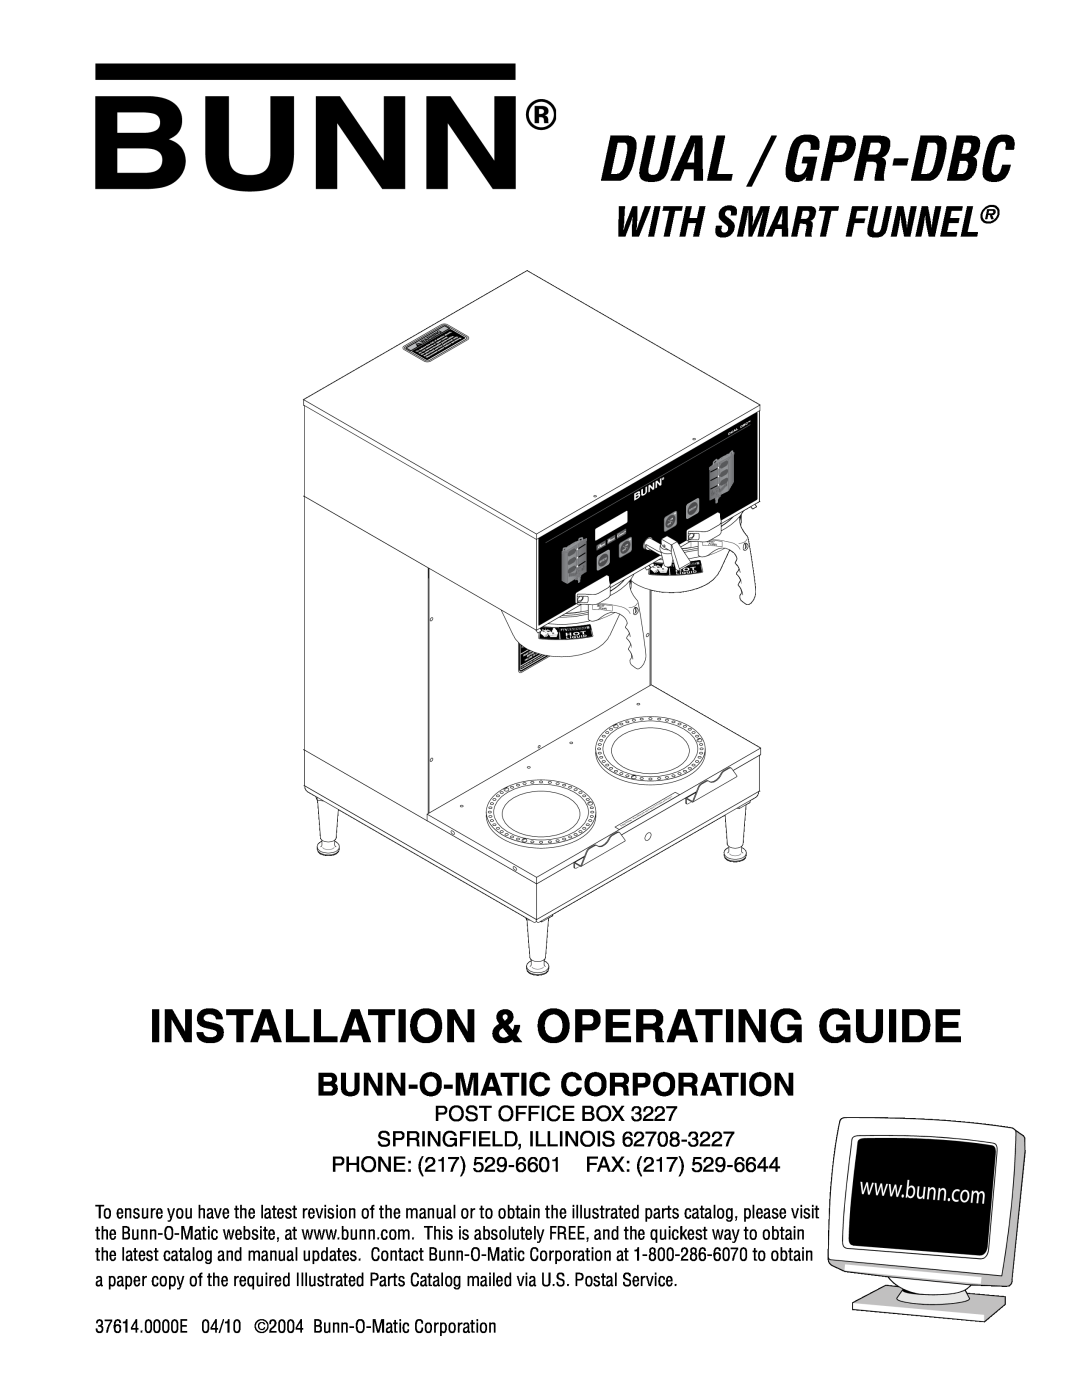 Bunn 37614 041410 manual Dual / Gpr-Dbc, Installation & Operating Guide, With Smart Funnel, Bunn-O-Matic Corporation, Sm F 